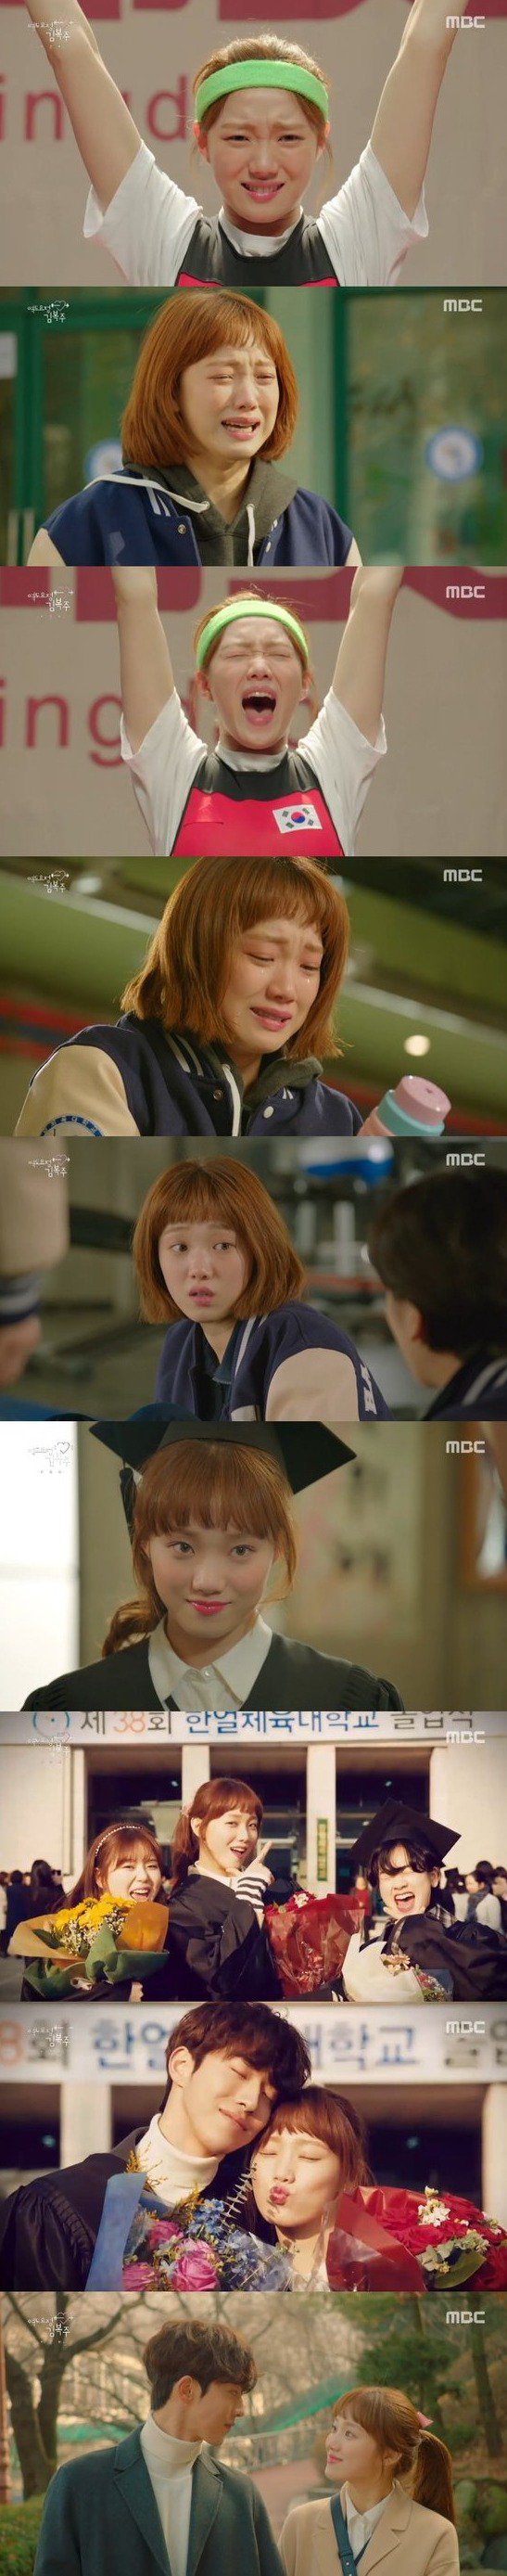 final episode 16 captures for the Korean drama 'Weightlifting Fairy Kim Bok-joo'